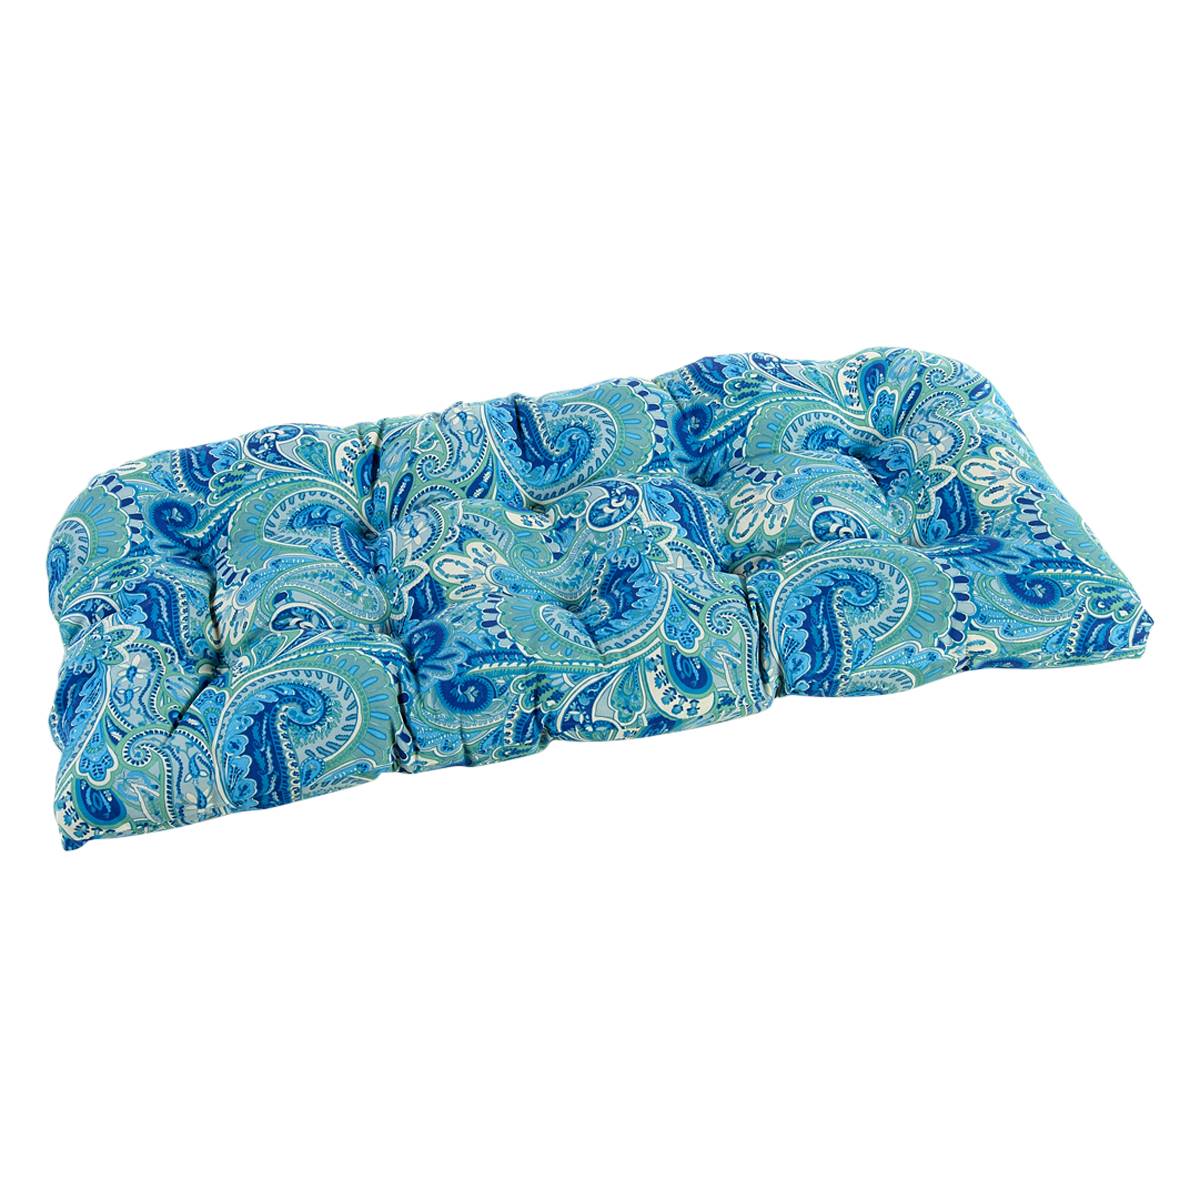 Jordan Manufacturing Wicker Settee Cushion - Turquoise Paisley